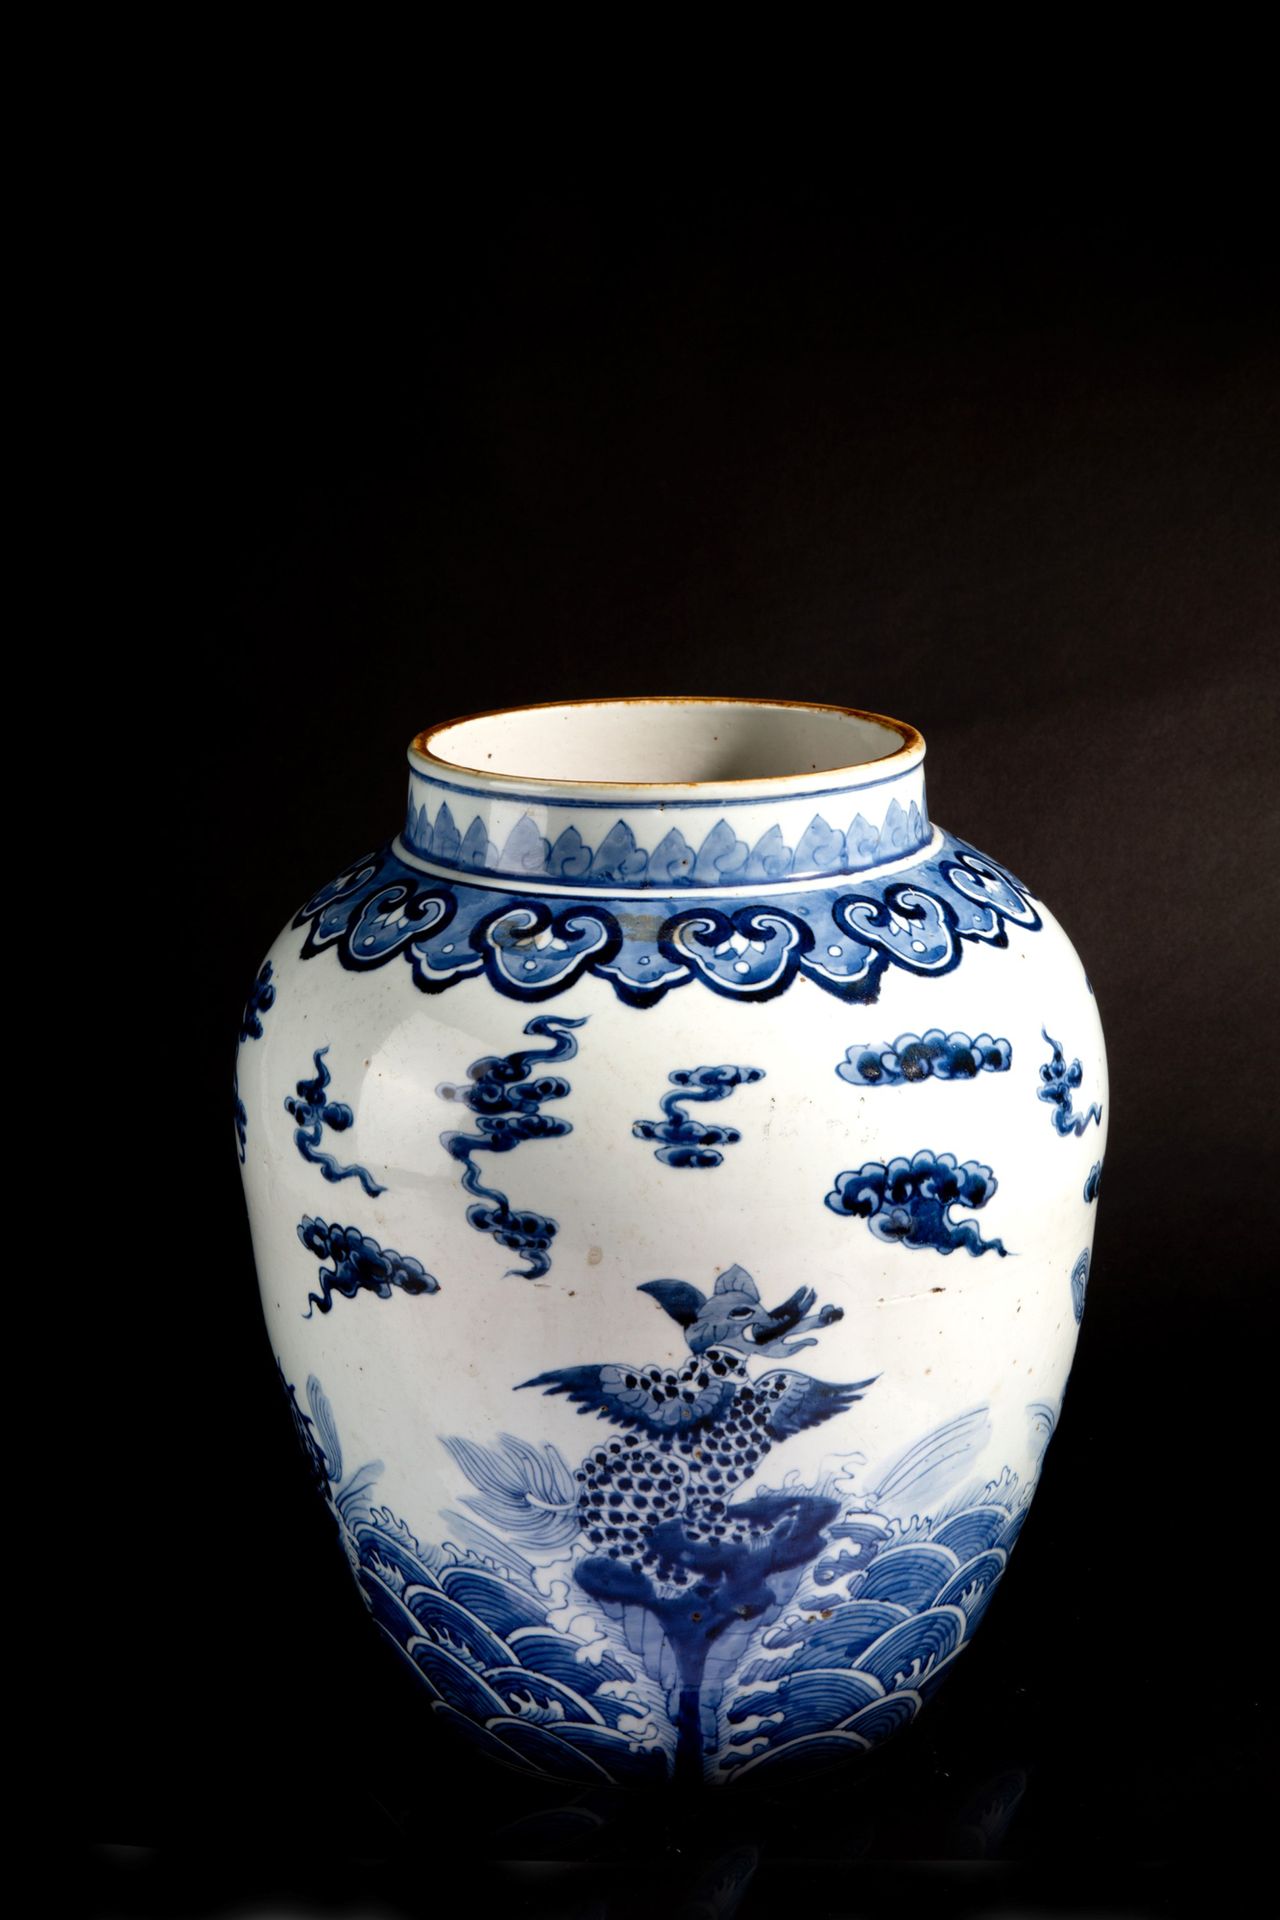 Potiche 青花瓷罐，描绘了 "神奇的动物"。中国。35x33 cm 约。